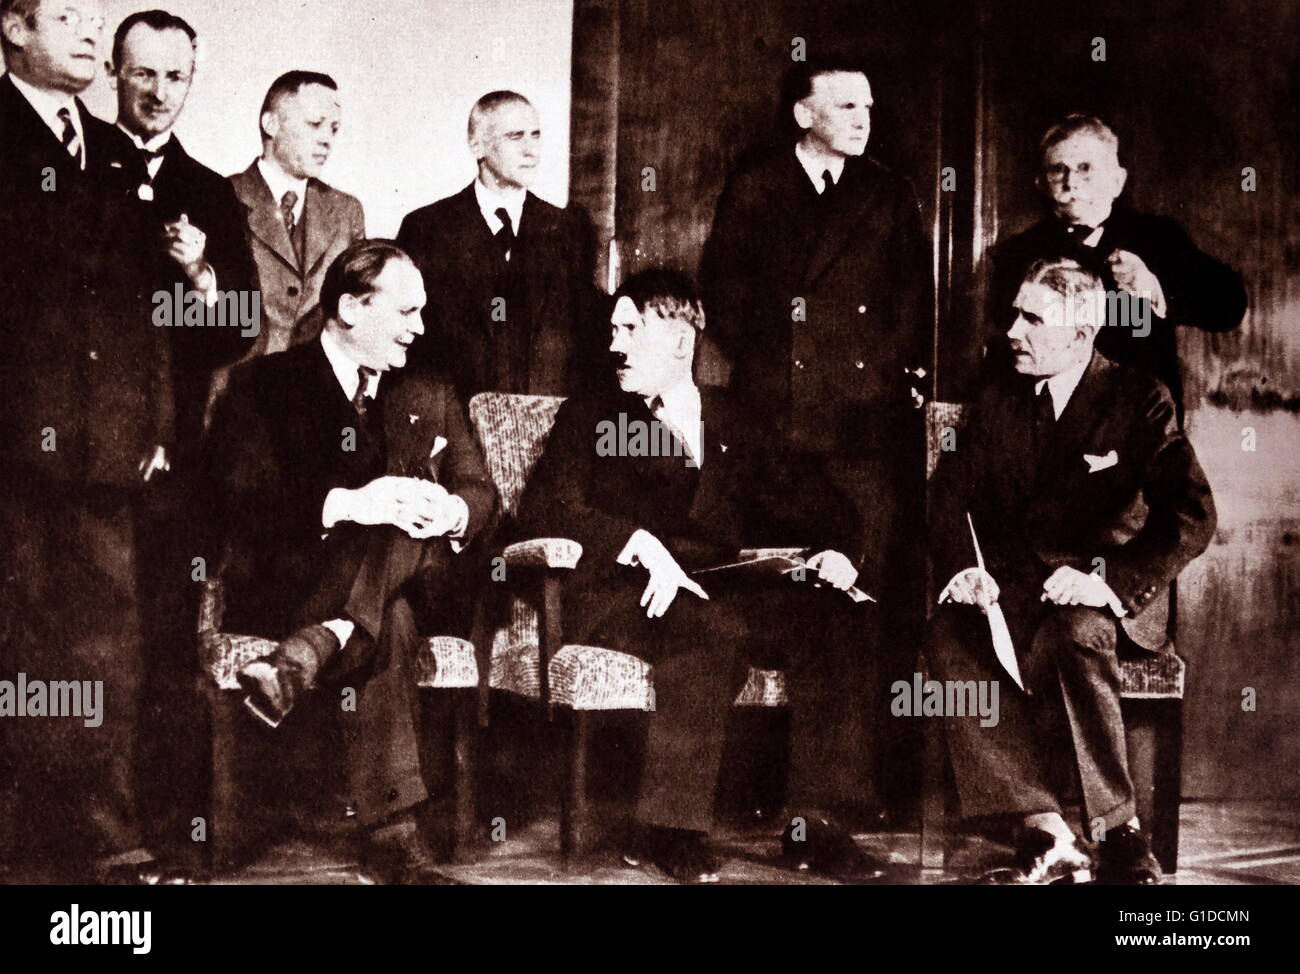 Stampa fotografica di Adolf Hitler e altri membri del gabinetto di Reich: Prima fila seduti da sinistra a destra: Hermann Göring (1893-1946), Adolf Hitler (1889-1945), Franz von Papen (1879-1969) . 2 fila in piedi da sinistra a destra: Franz Seldte (1882-1945), il dott. Günther Gereke (1893-1970), Lutz Graf Schwerin von Krosigk (1887-1977), Wilhelm Frick (1877-1946), Werner von Blomberg, Hugenberg Alfred (1878-1946). In data xx secolo. Foto Stock